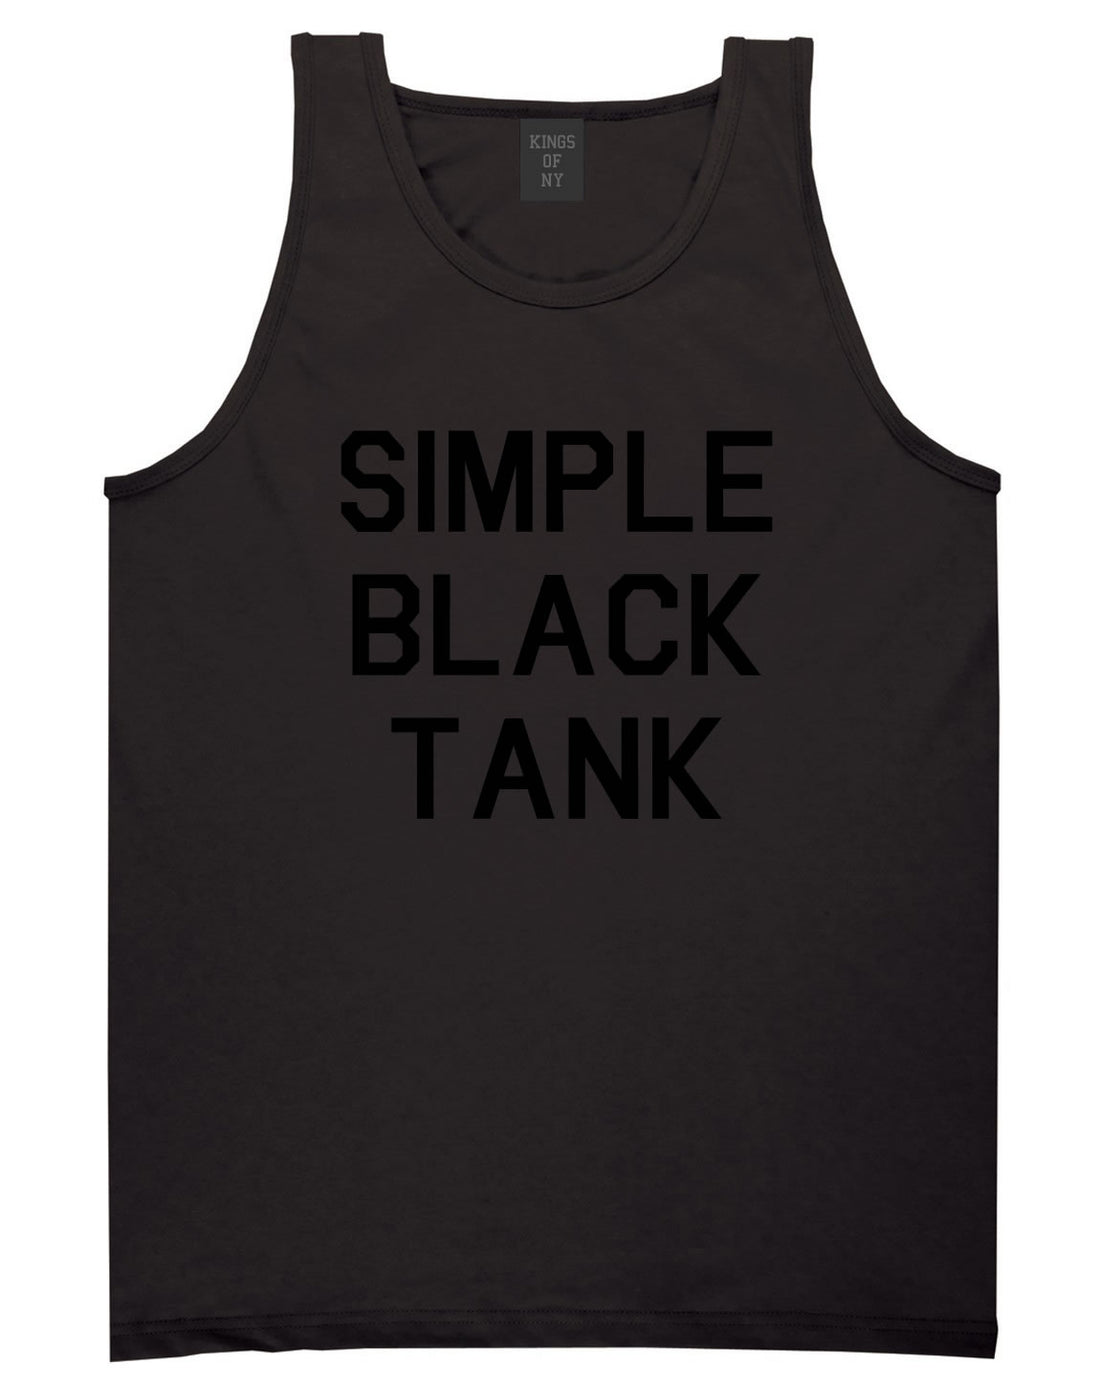 Simple Black T-Sh